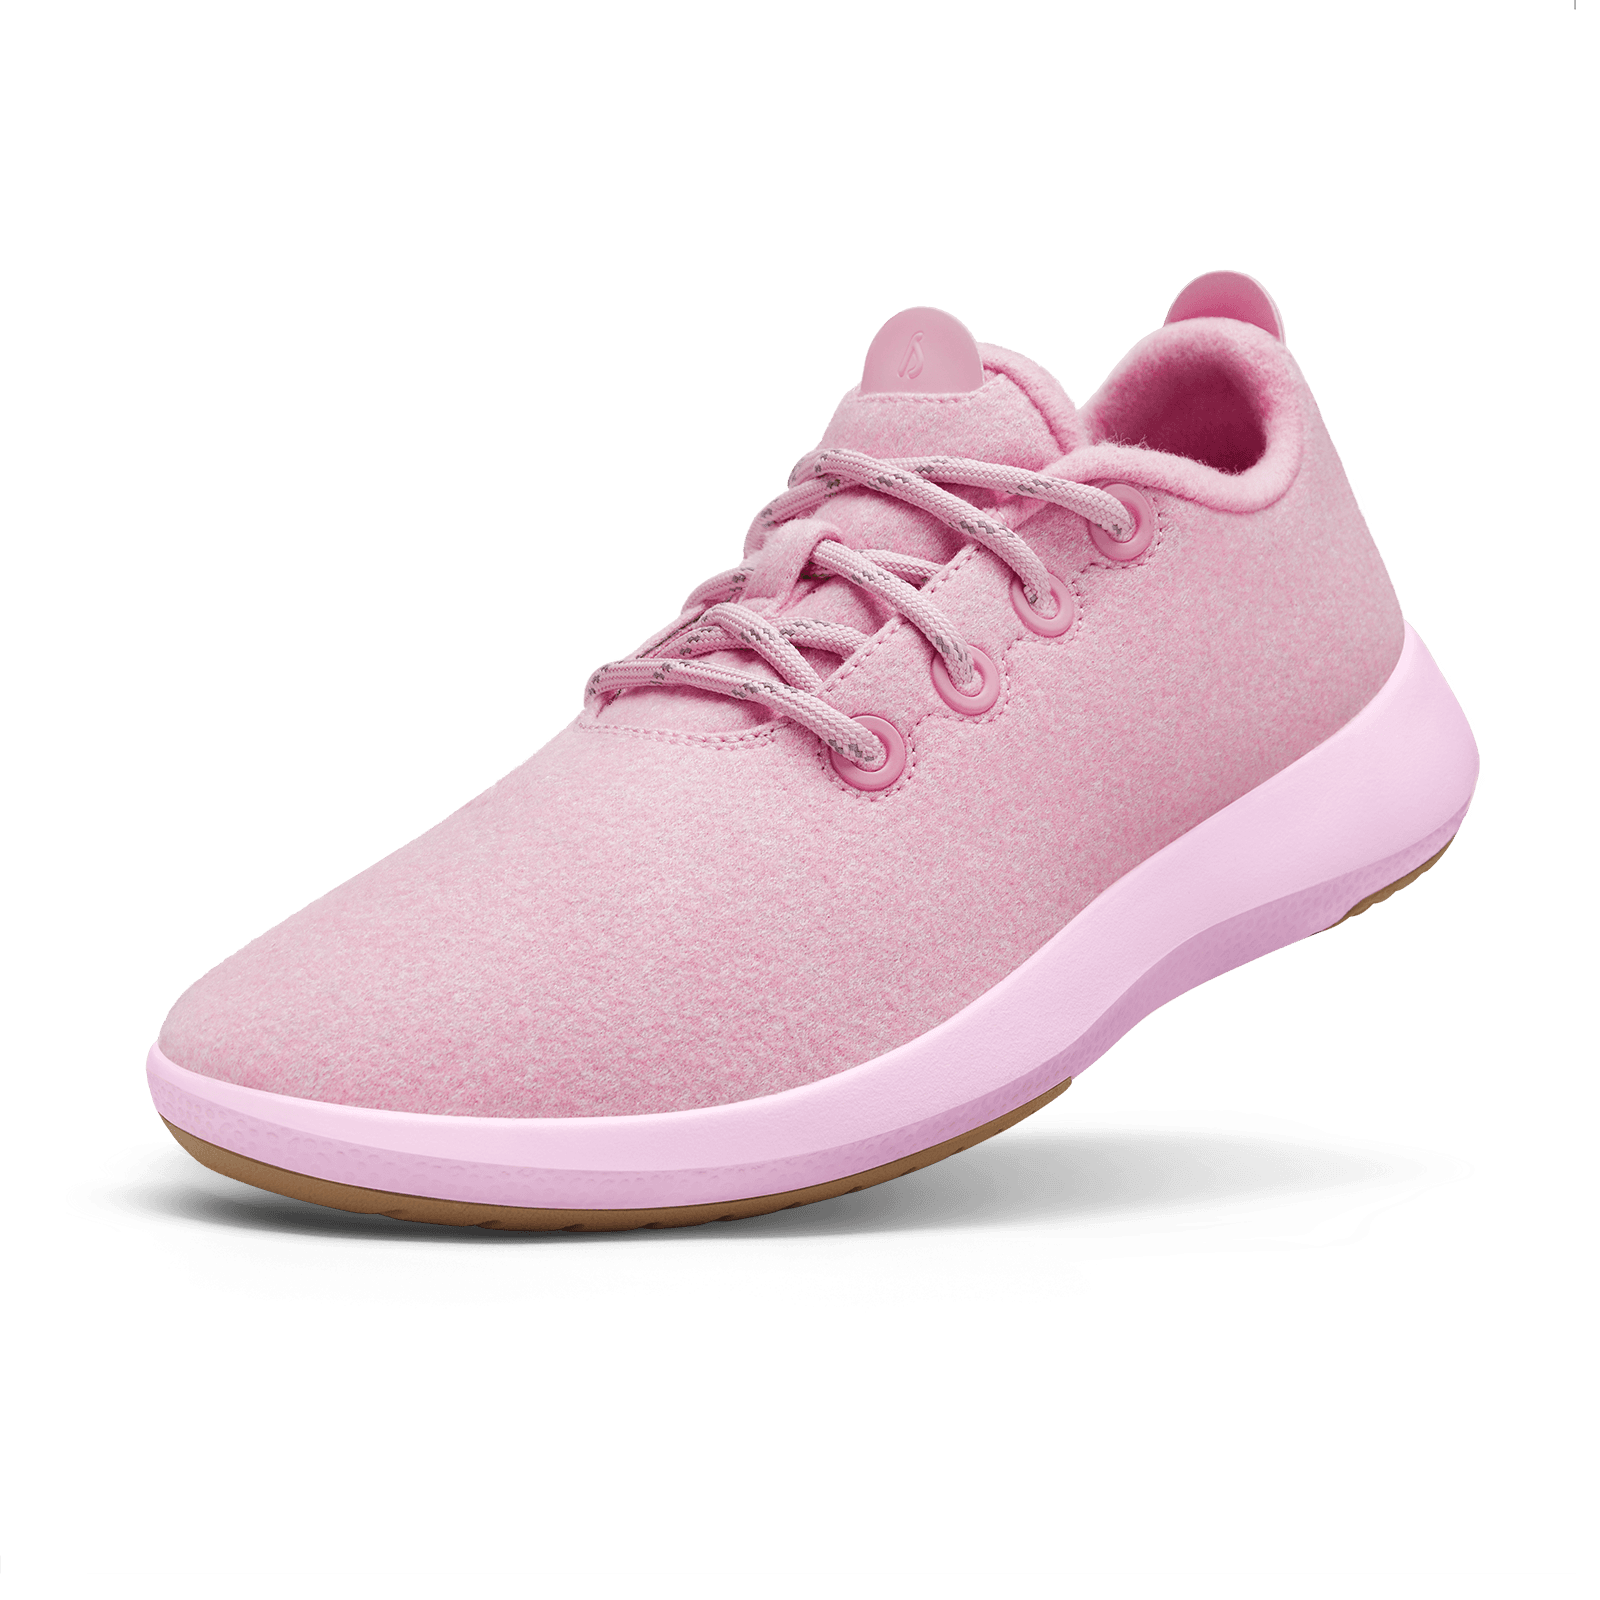 Men's Wool Runner Mizzles - Buoyant Pink (Buoyant Sole)